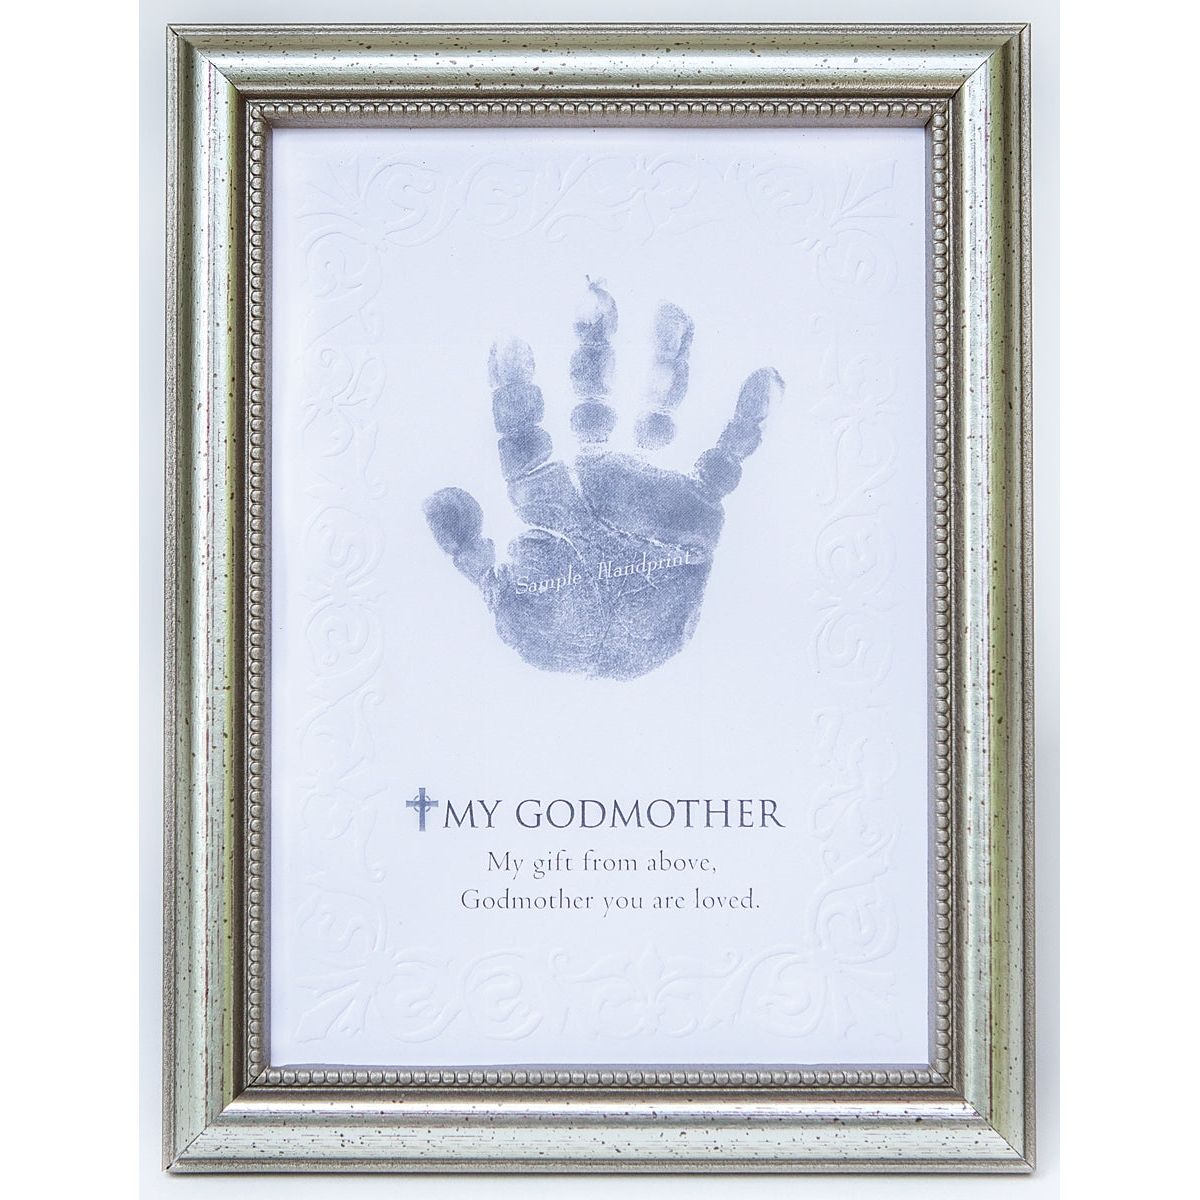 My Godmother handprint keepsake in elegant frame in silver with embossed beaded design.